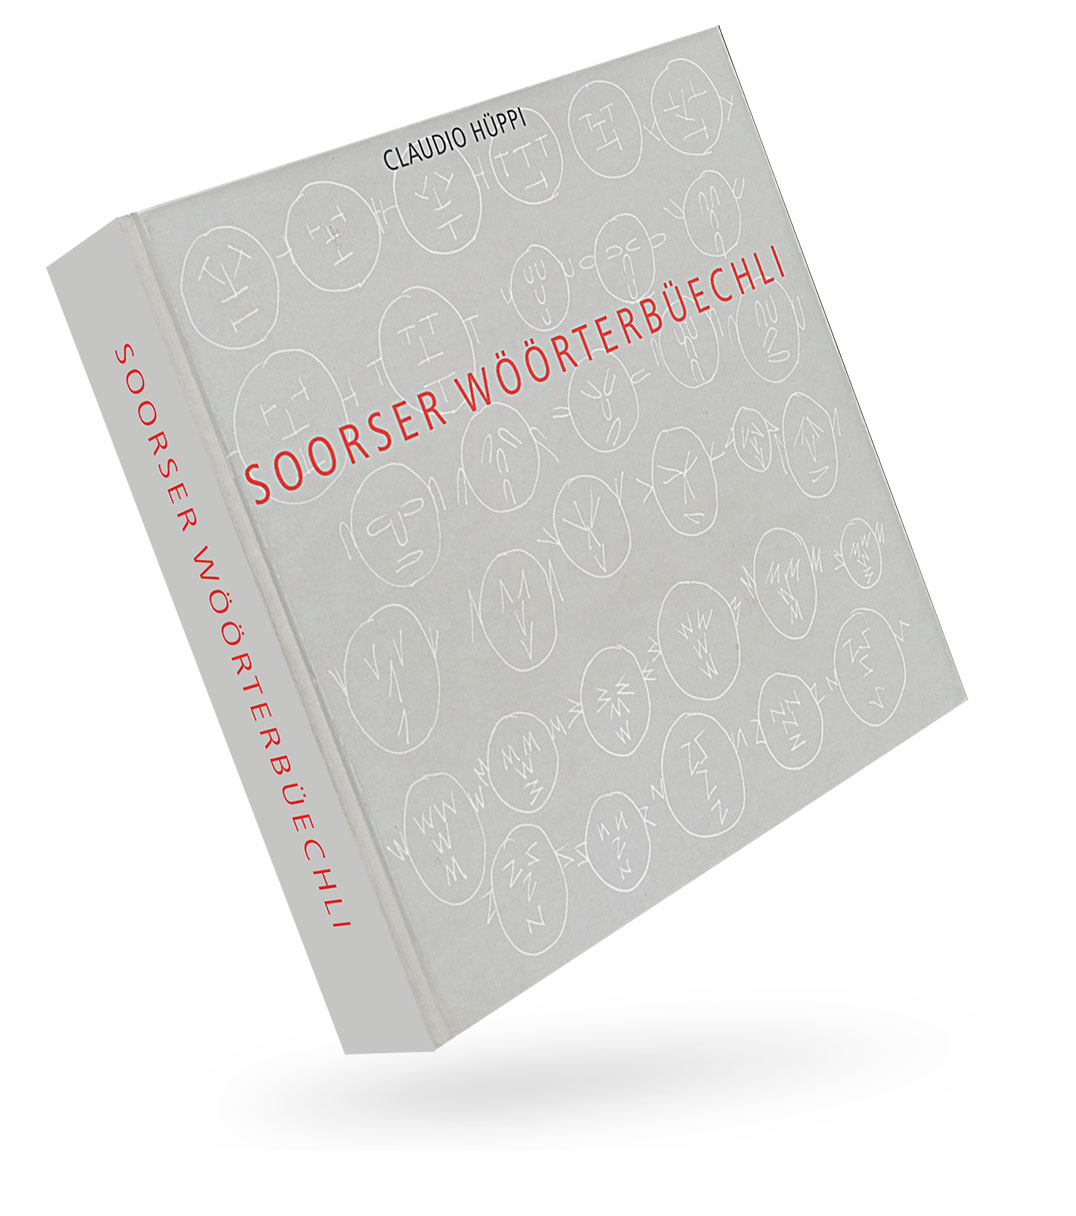 Soorser Wöörterbüechli Cover